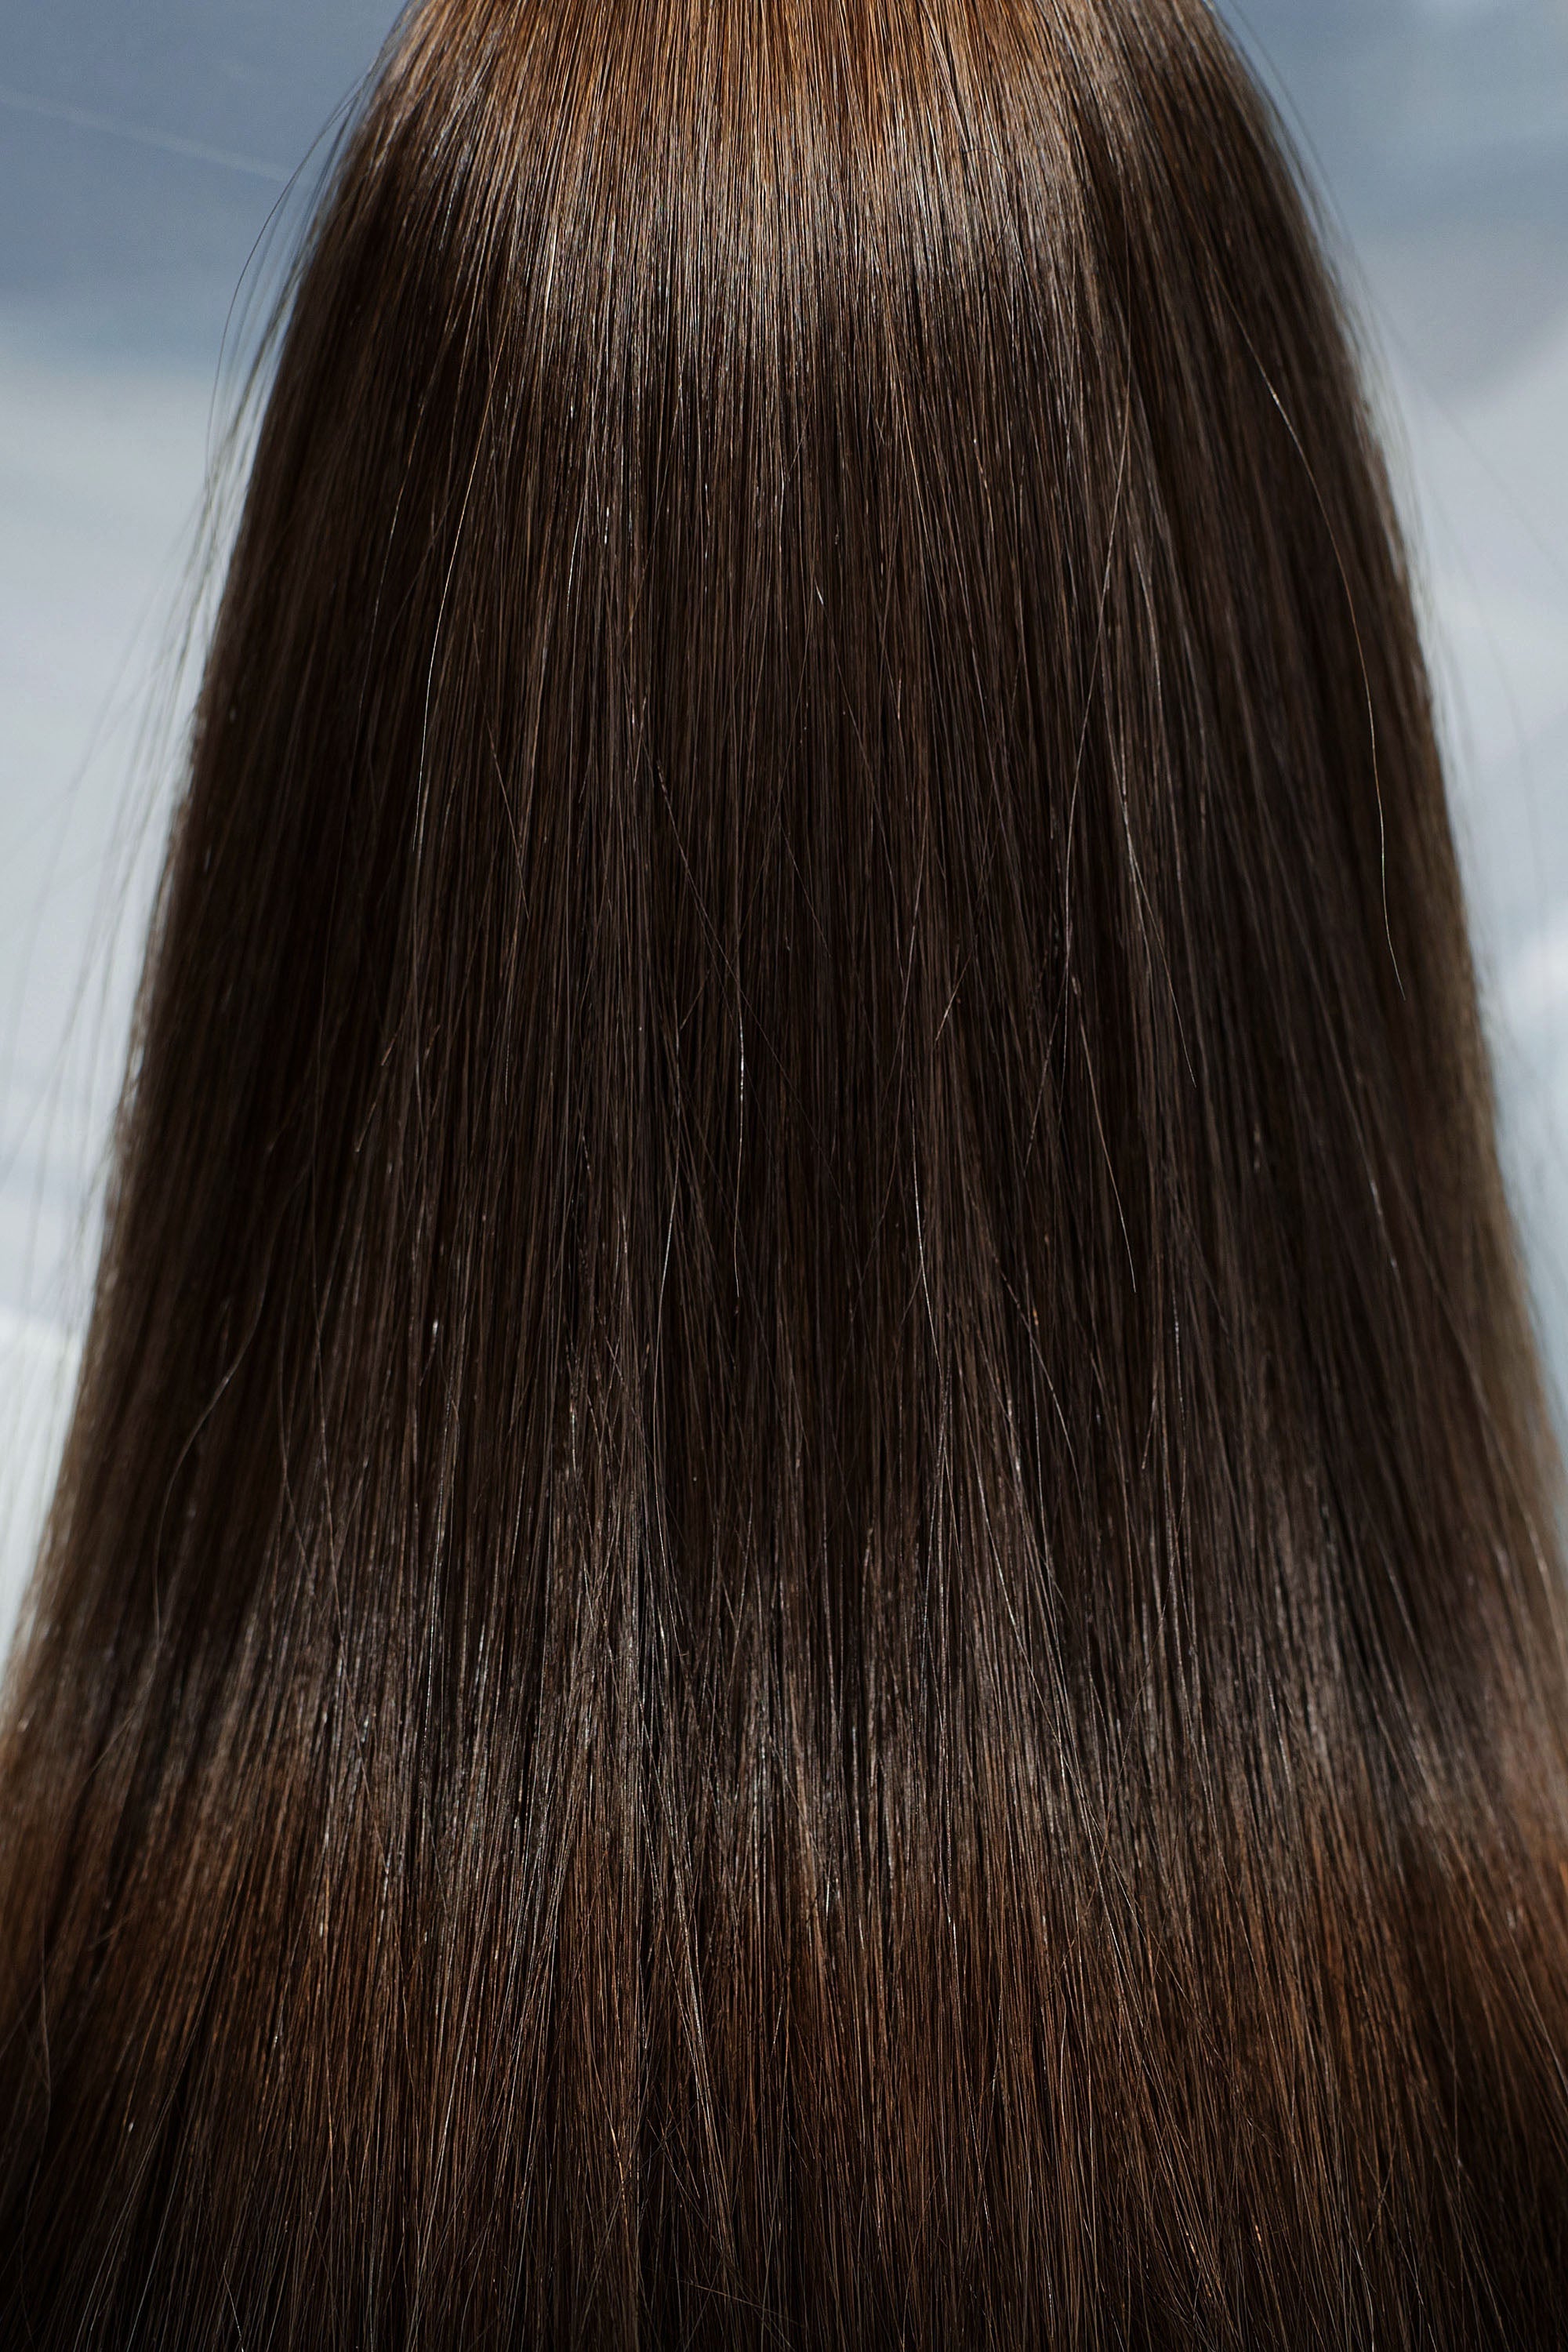 Behair professional Keratin Tip "Premium" 28" (70cm) Natural Straight Light Brown #4 - 25g (Micro - 0.5g each pcs) hair extensions